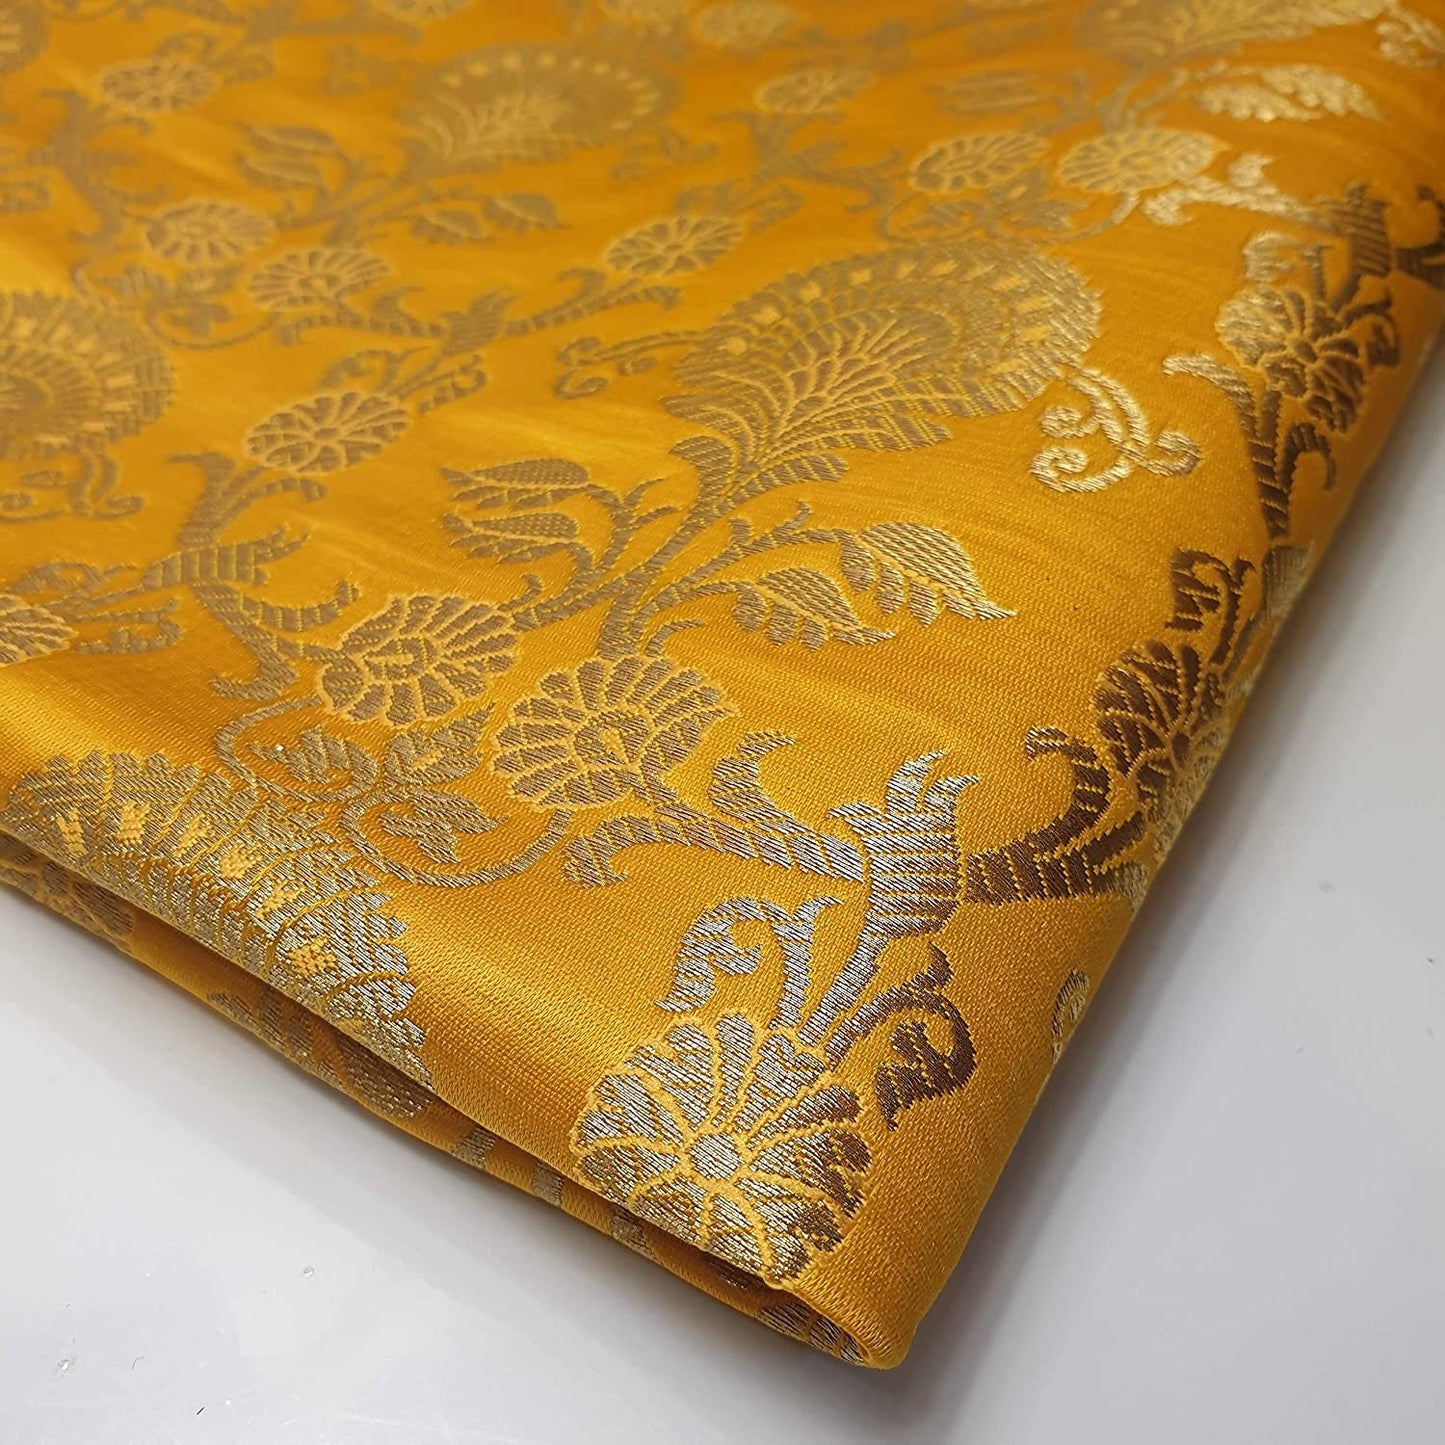 Ornamental Floral Gold Metallic Print Indian Banarasi Brocade Fabric (Mustard Yellow)